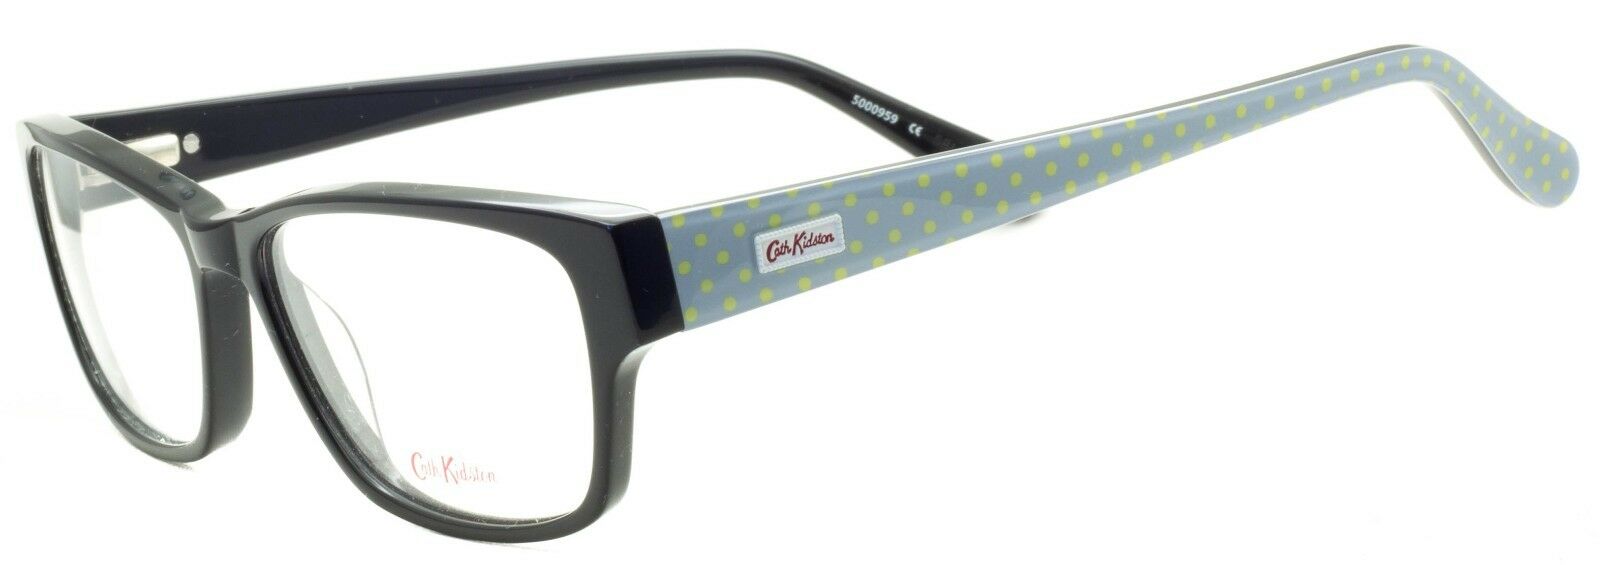 Cath Kidston 03 30474888 54mm FRAMES Glasses RX Optical Eyewear Eyeglasses - New